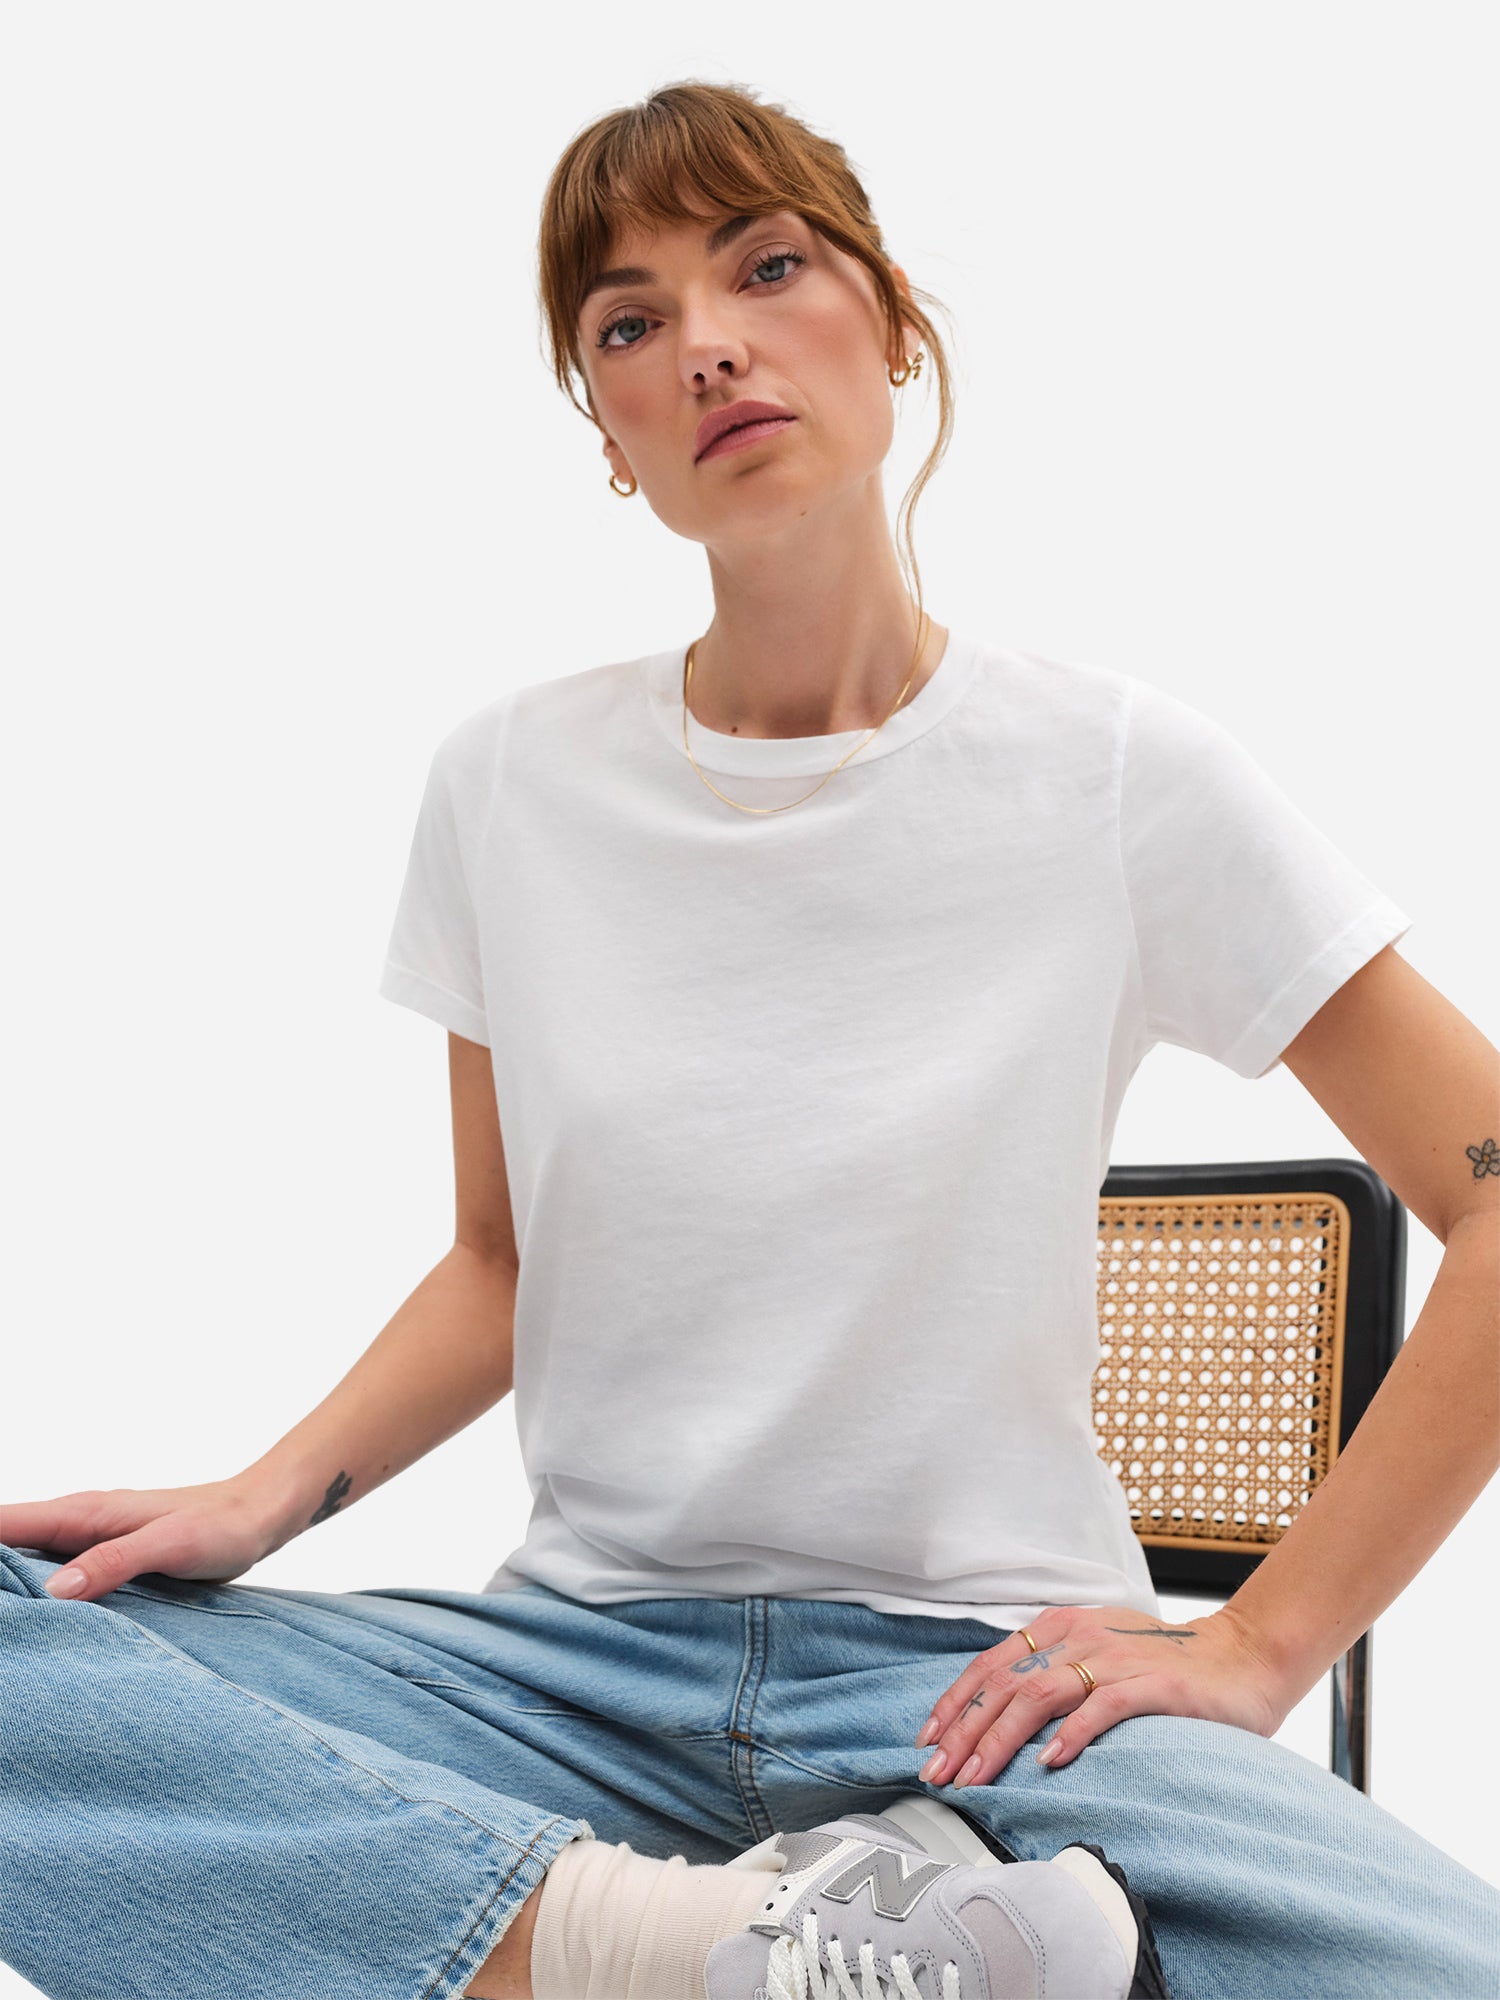 Plain T-Shirt Women White Cotton Full Coverage Bra at Rs 40/piece